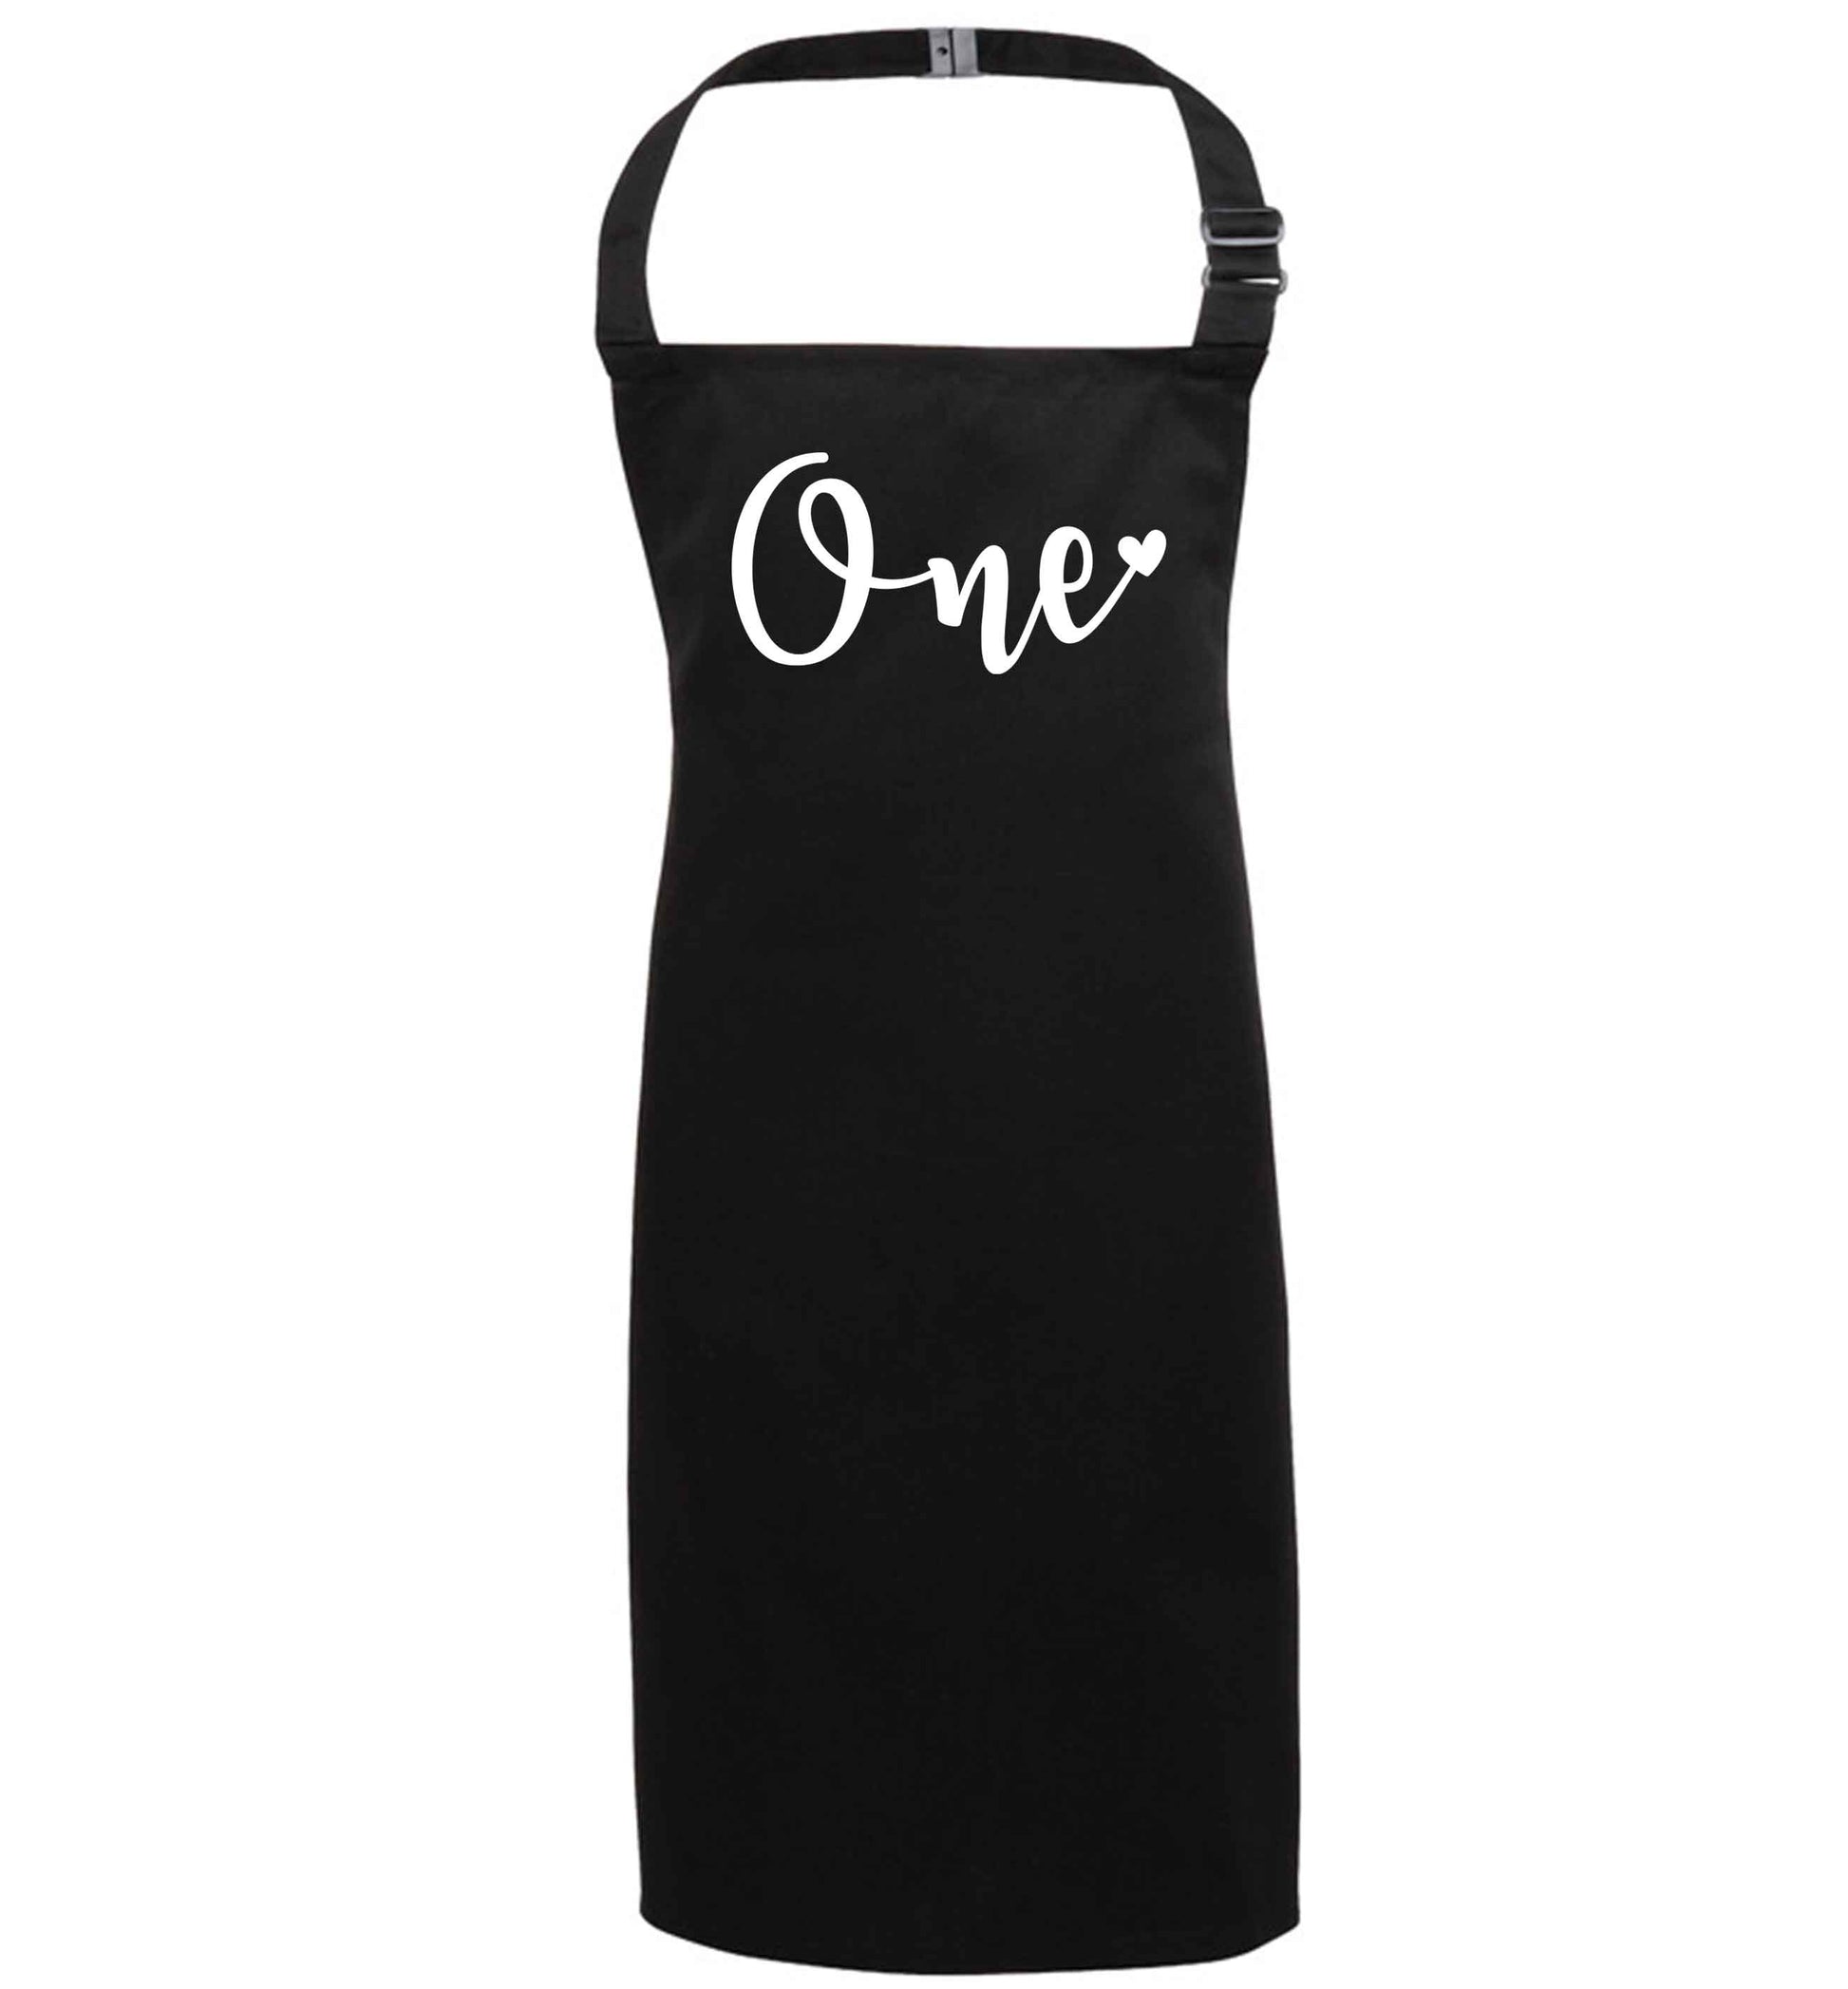 One black apron 7-10 years